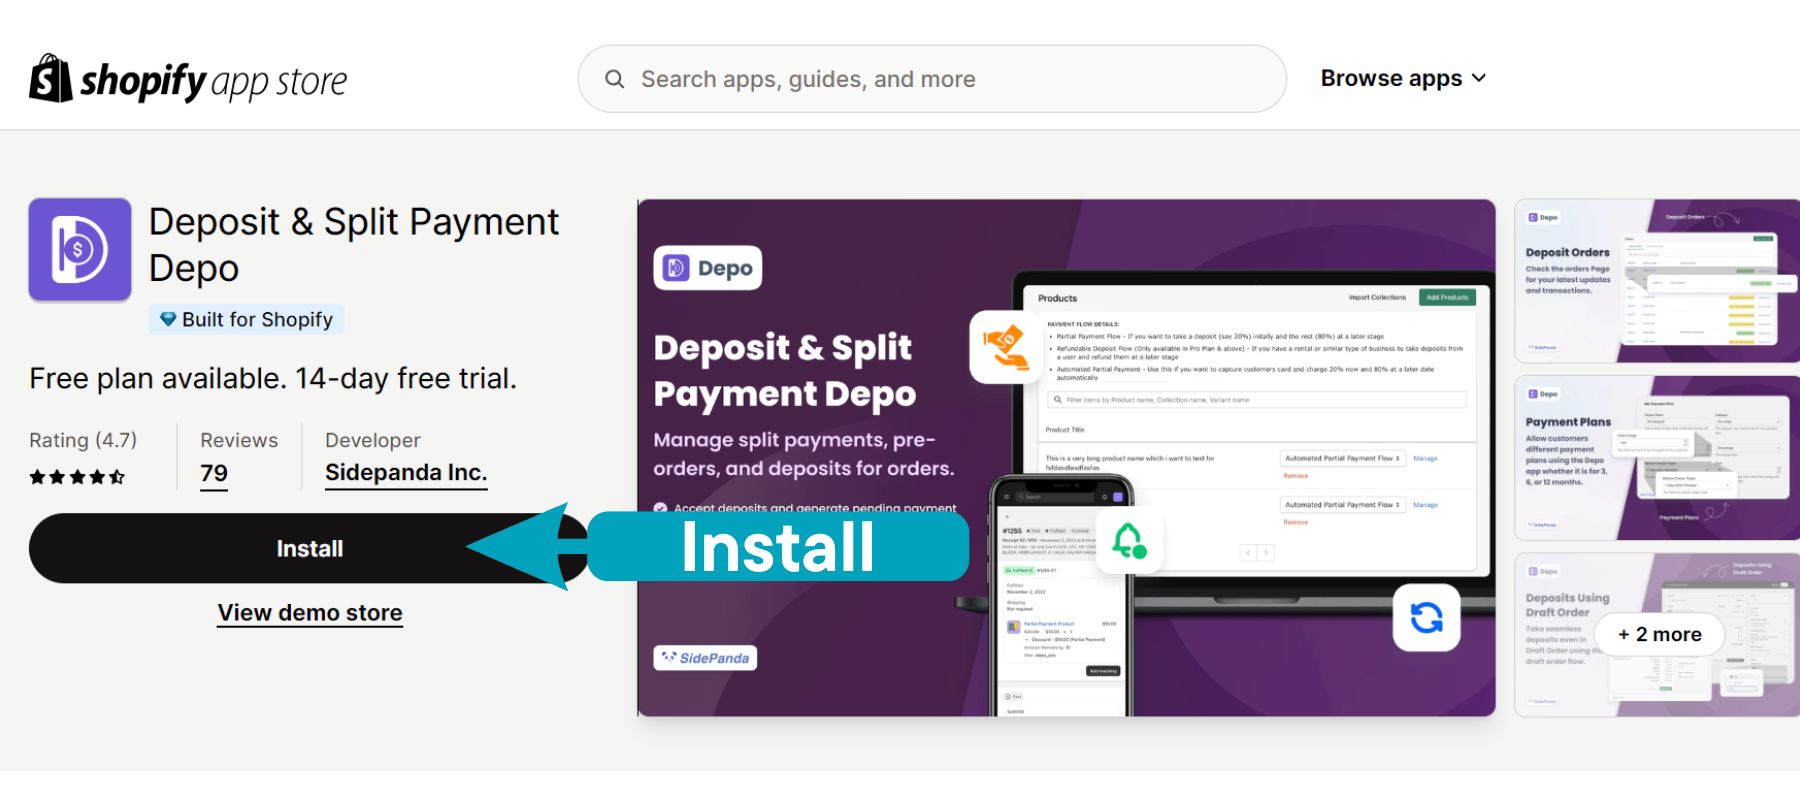 install the Deposit & Split Payment Depo app